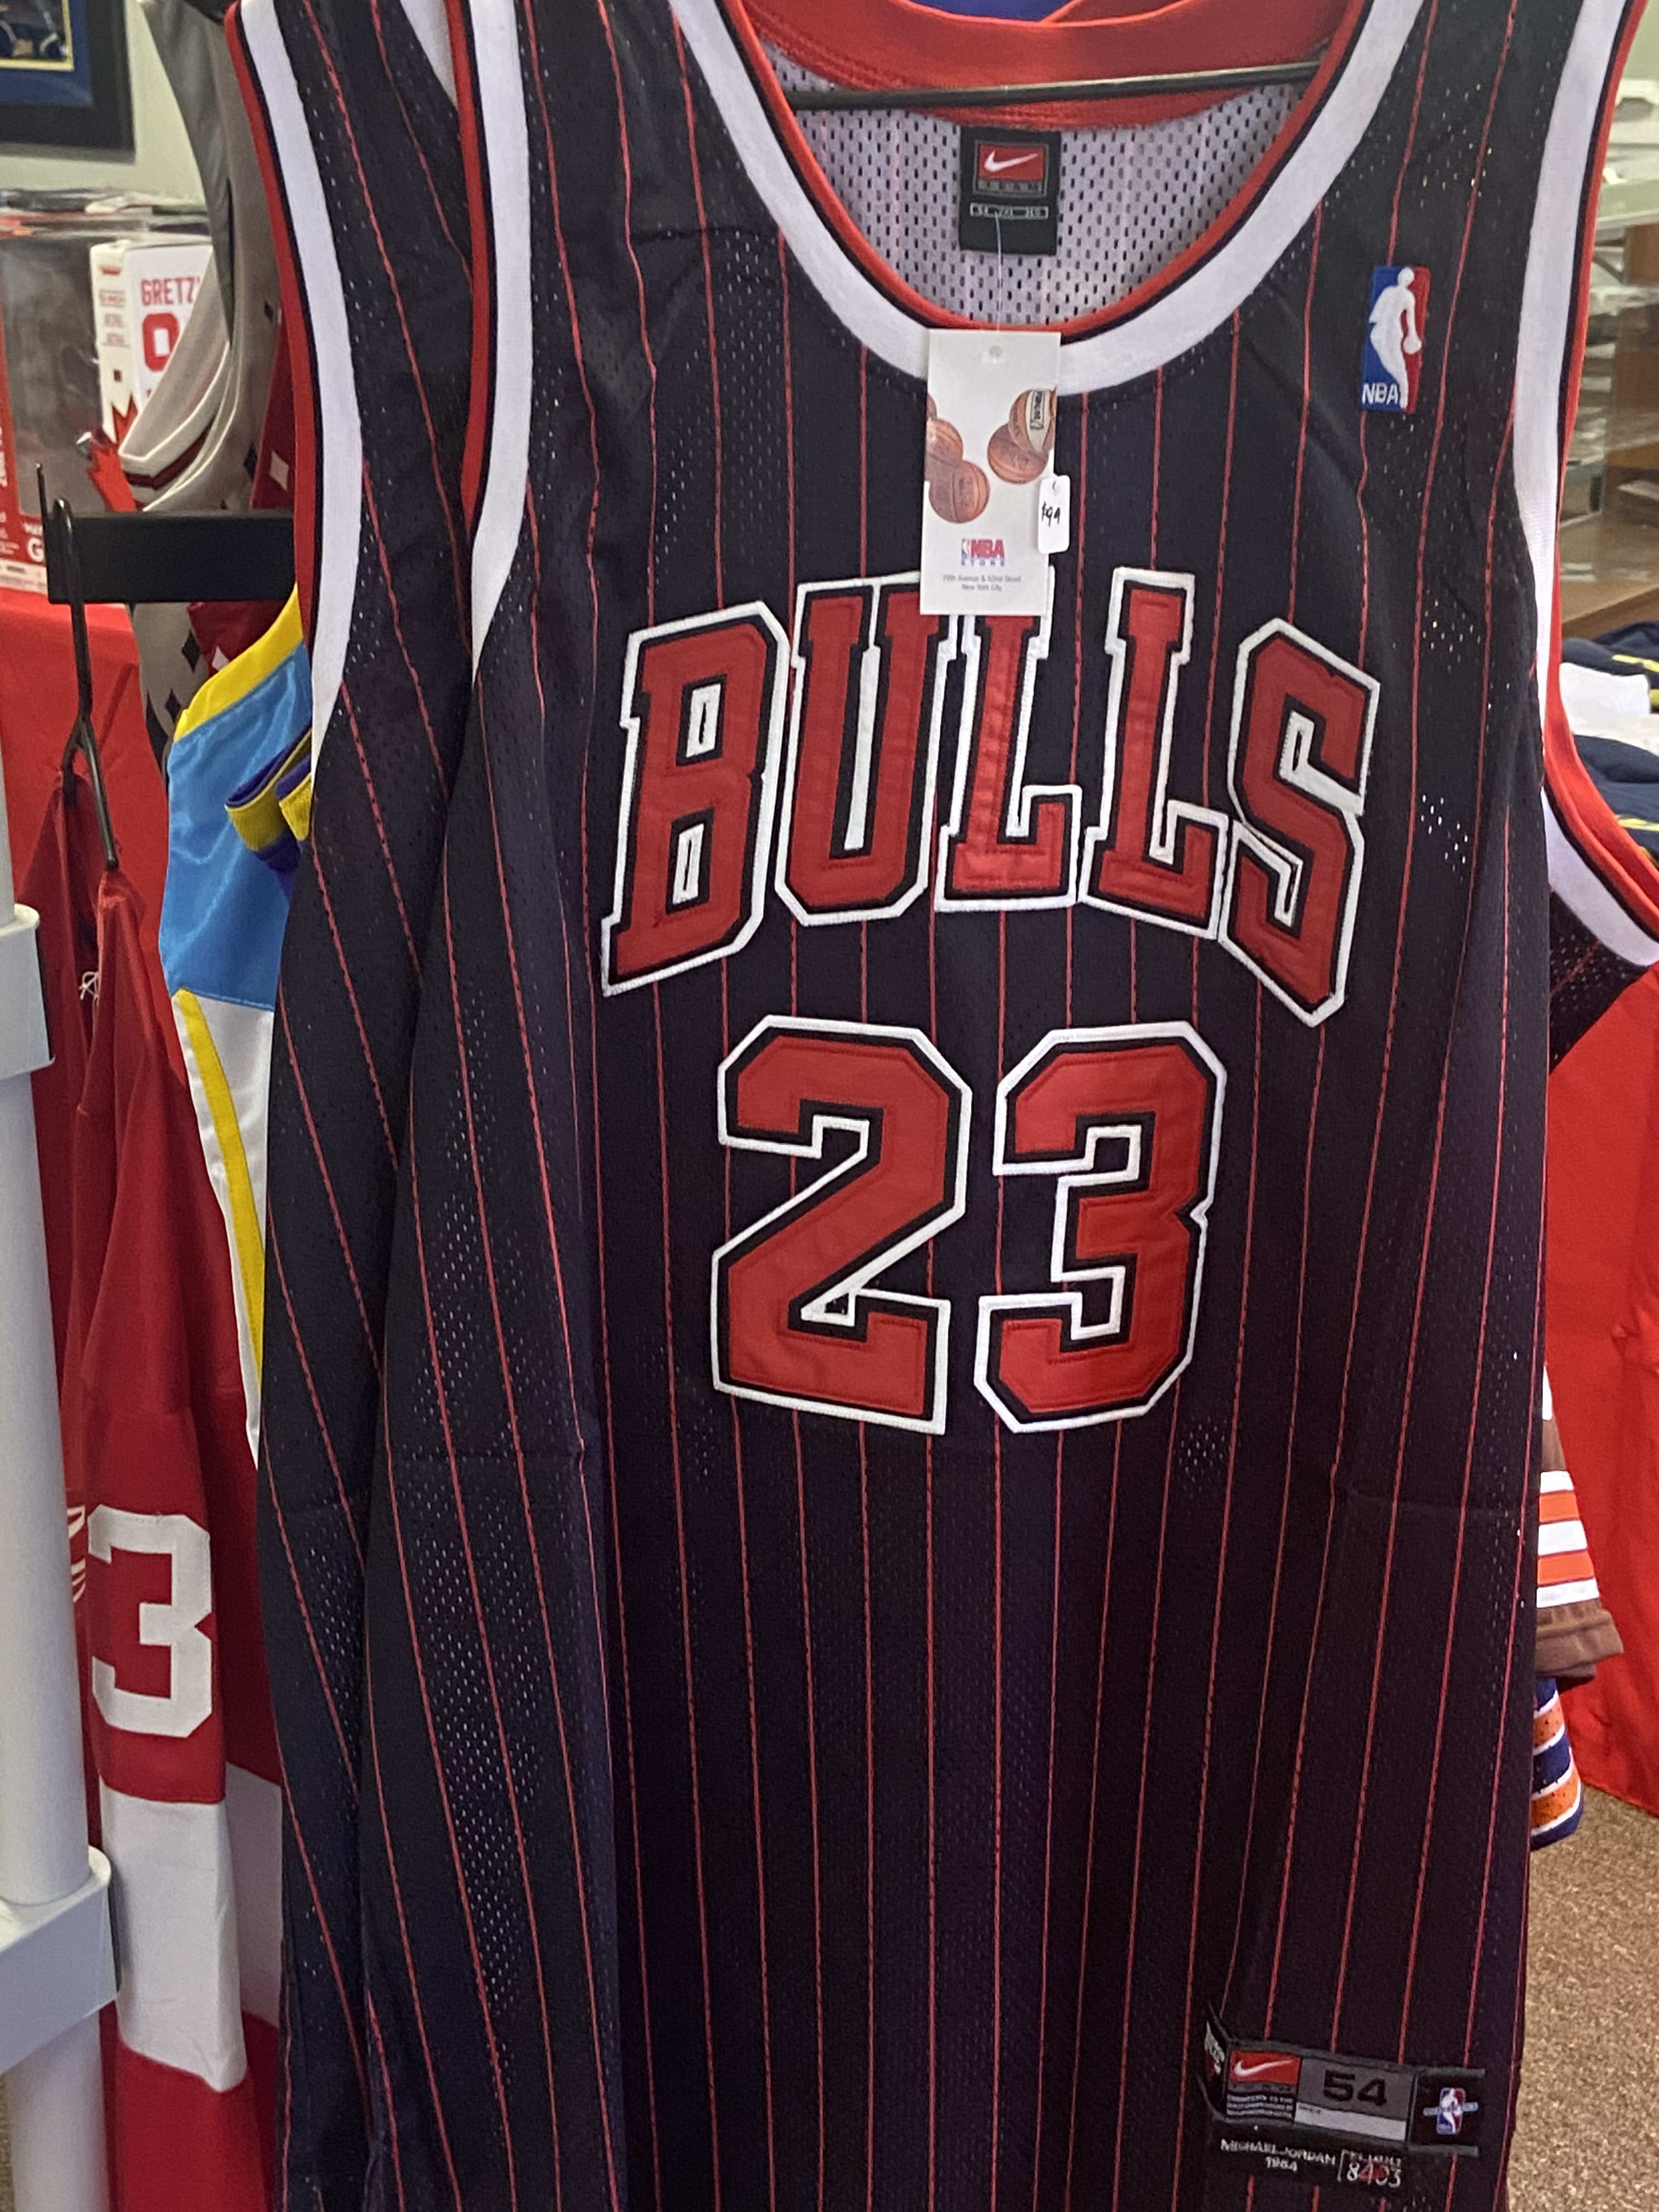 Michael Jordan #23 - Chicago Bulls Jersey - Sports Memorabilia - B